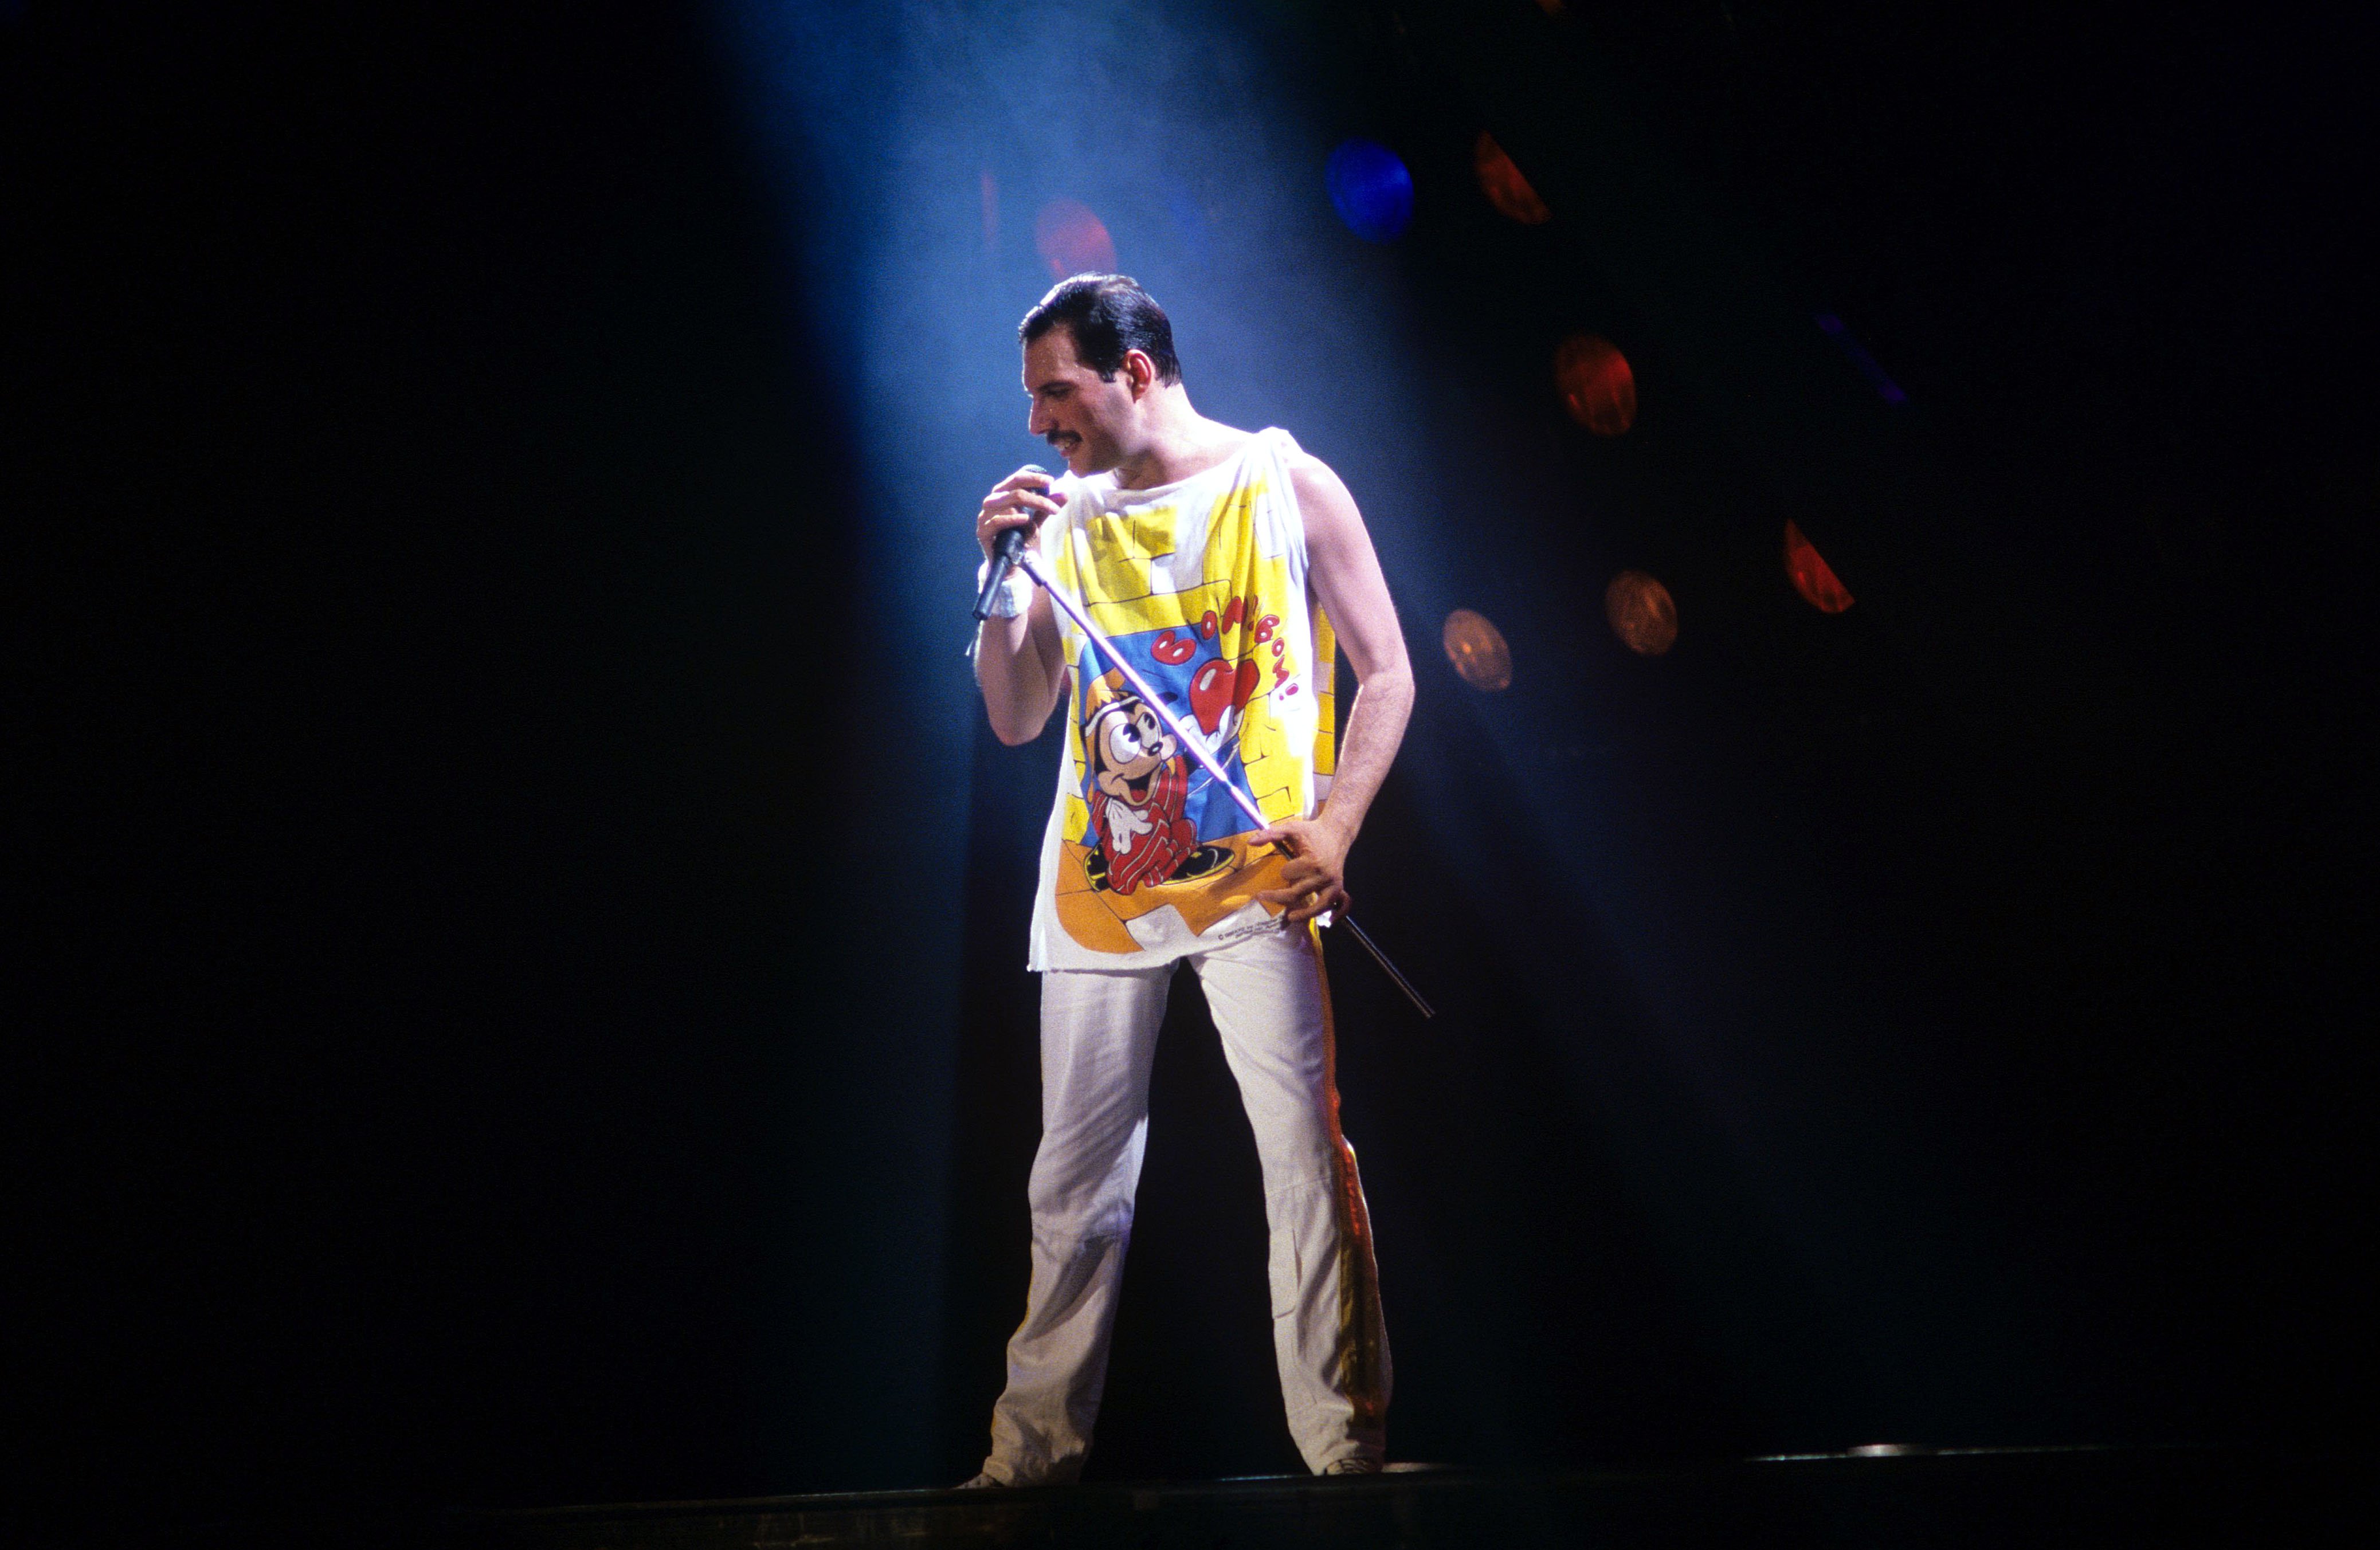 Freddie Mercury performing with Queen, June 15, 1985 | Photo: GettyImages